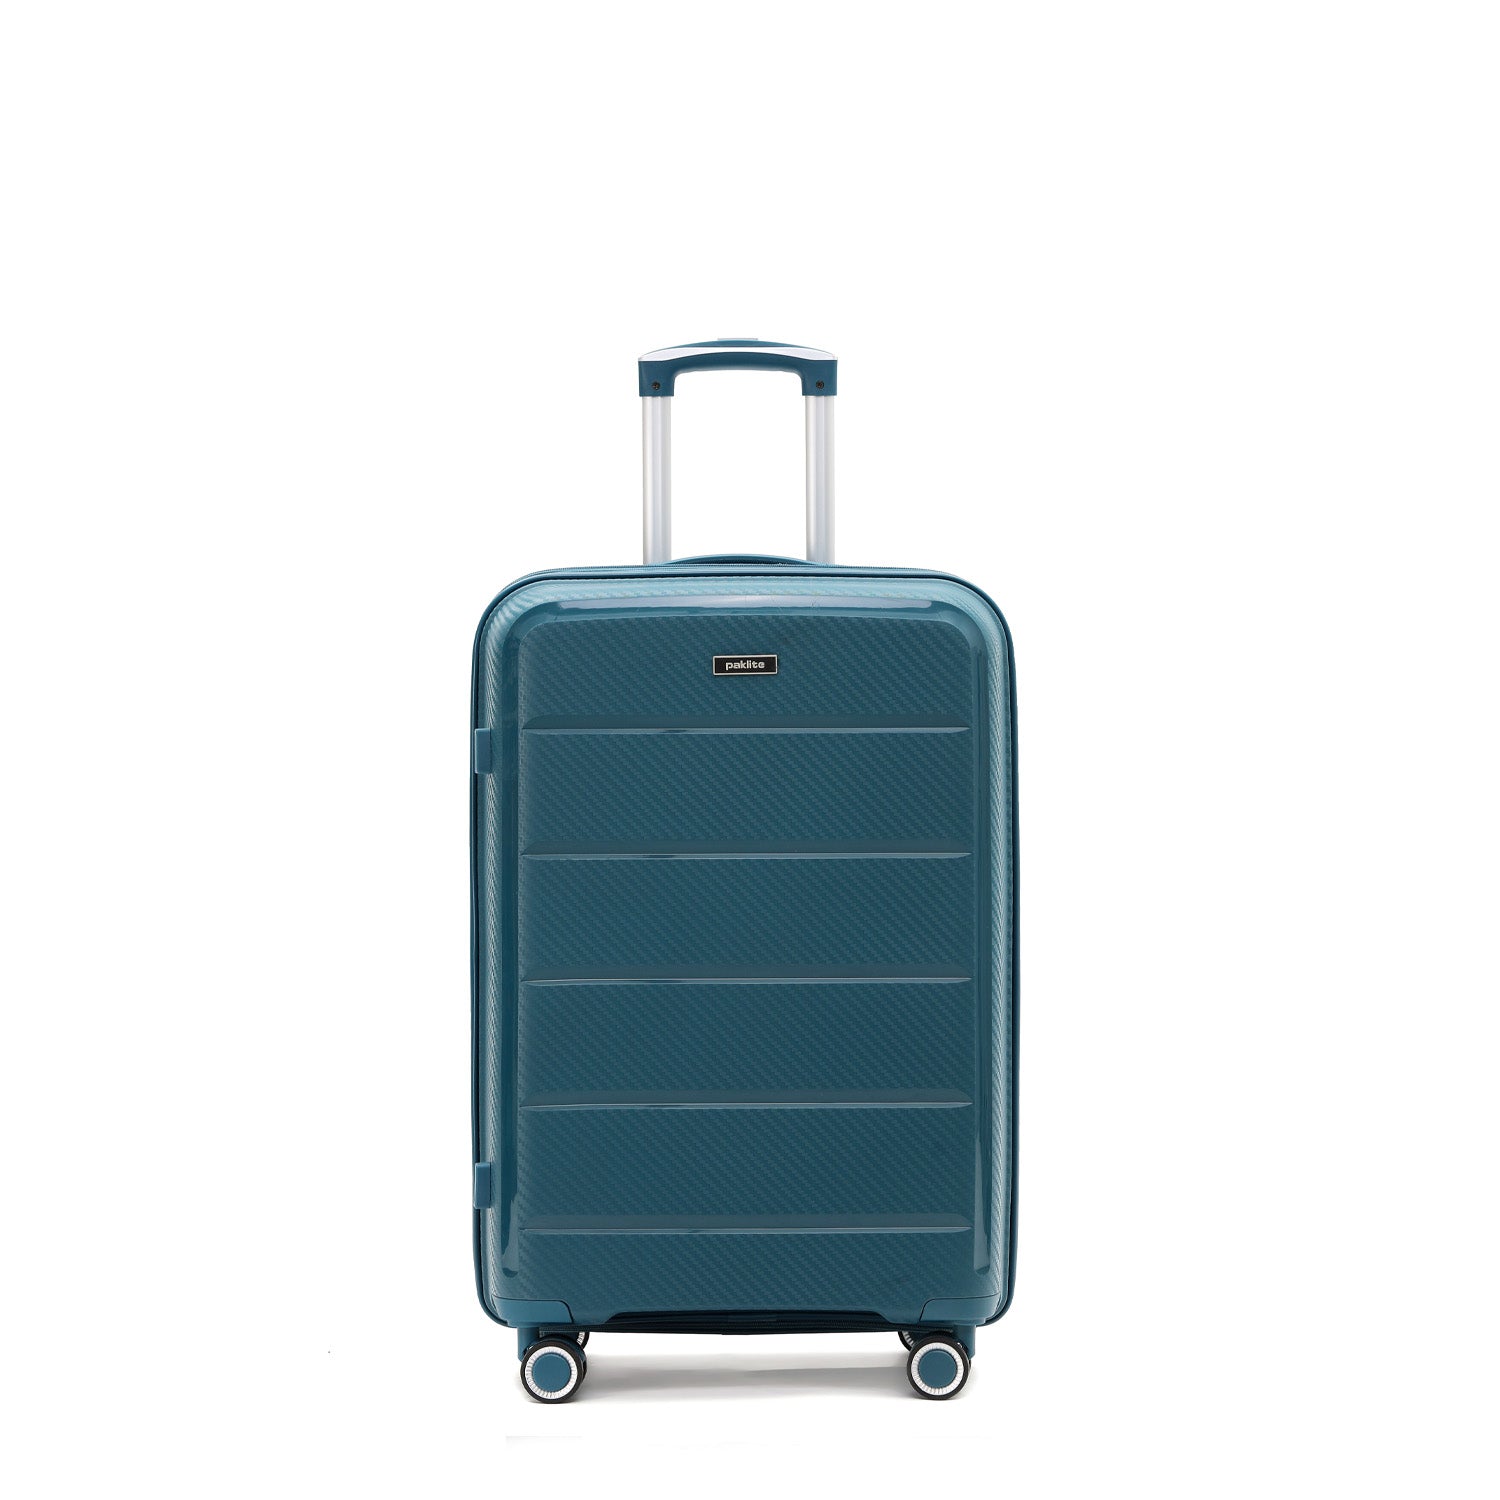 Paklite - PA7350 Set of 3 Suitcases - Blue-9